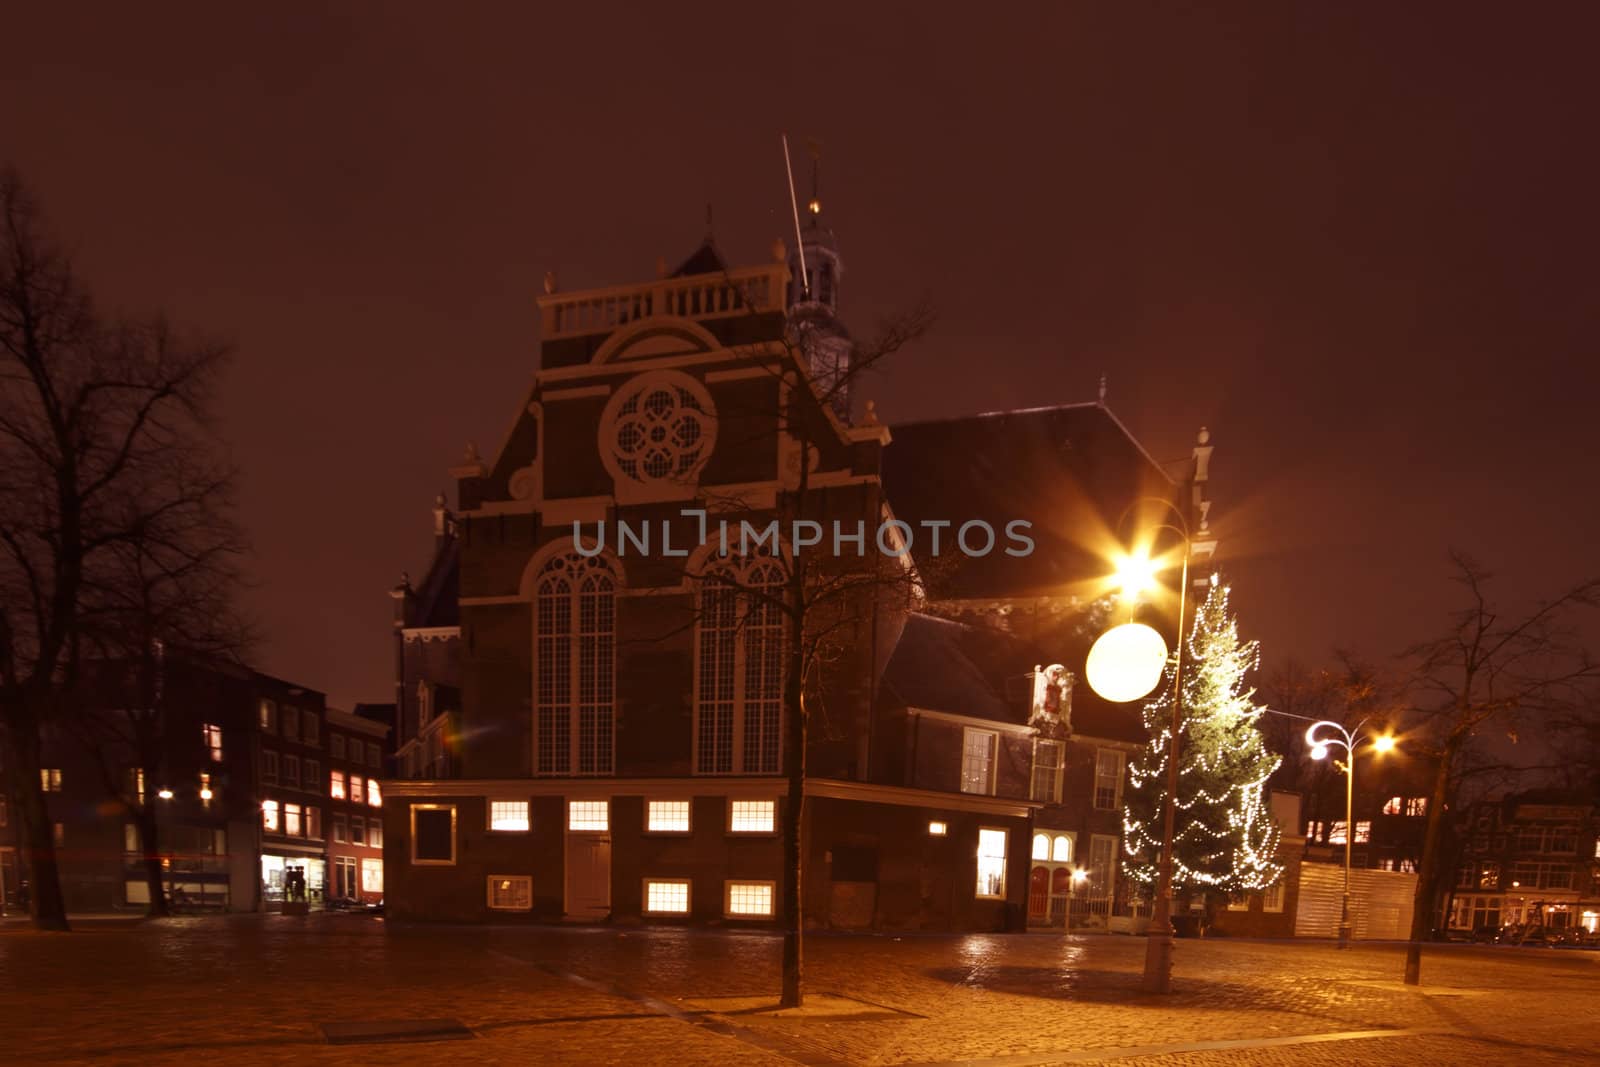 Noorderkerk in Amsterdam the Netherlands by night